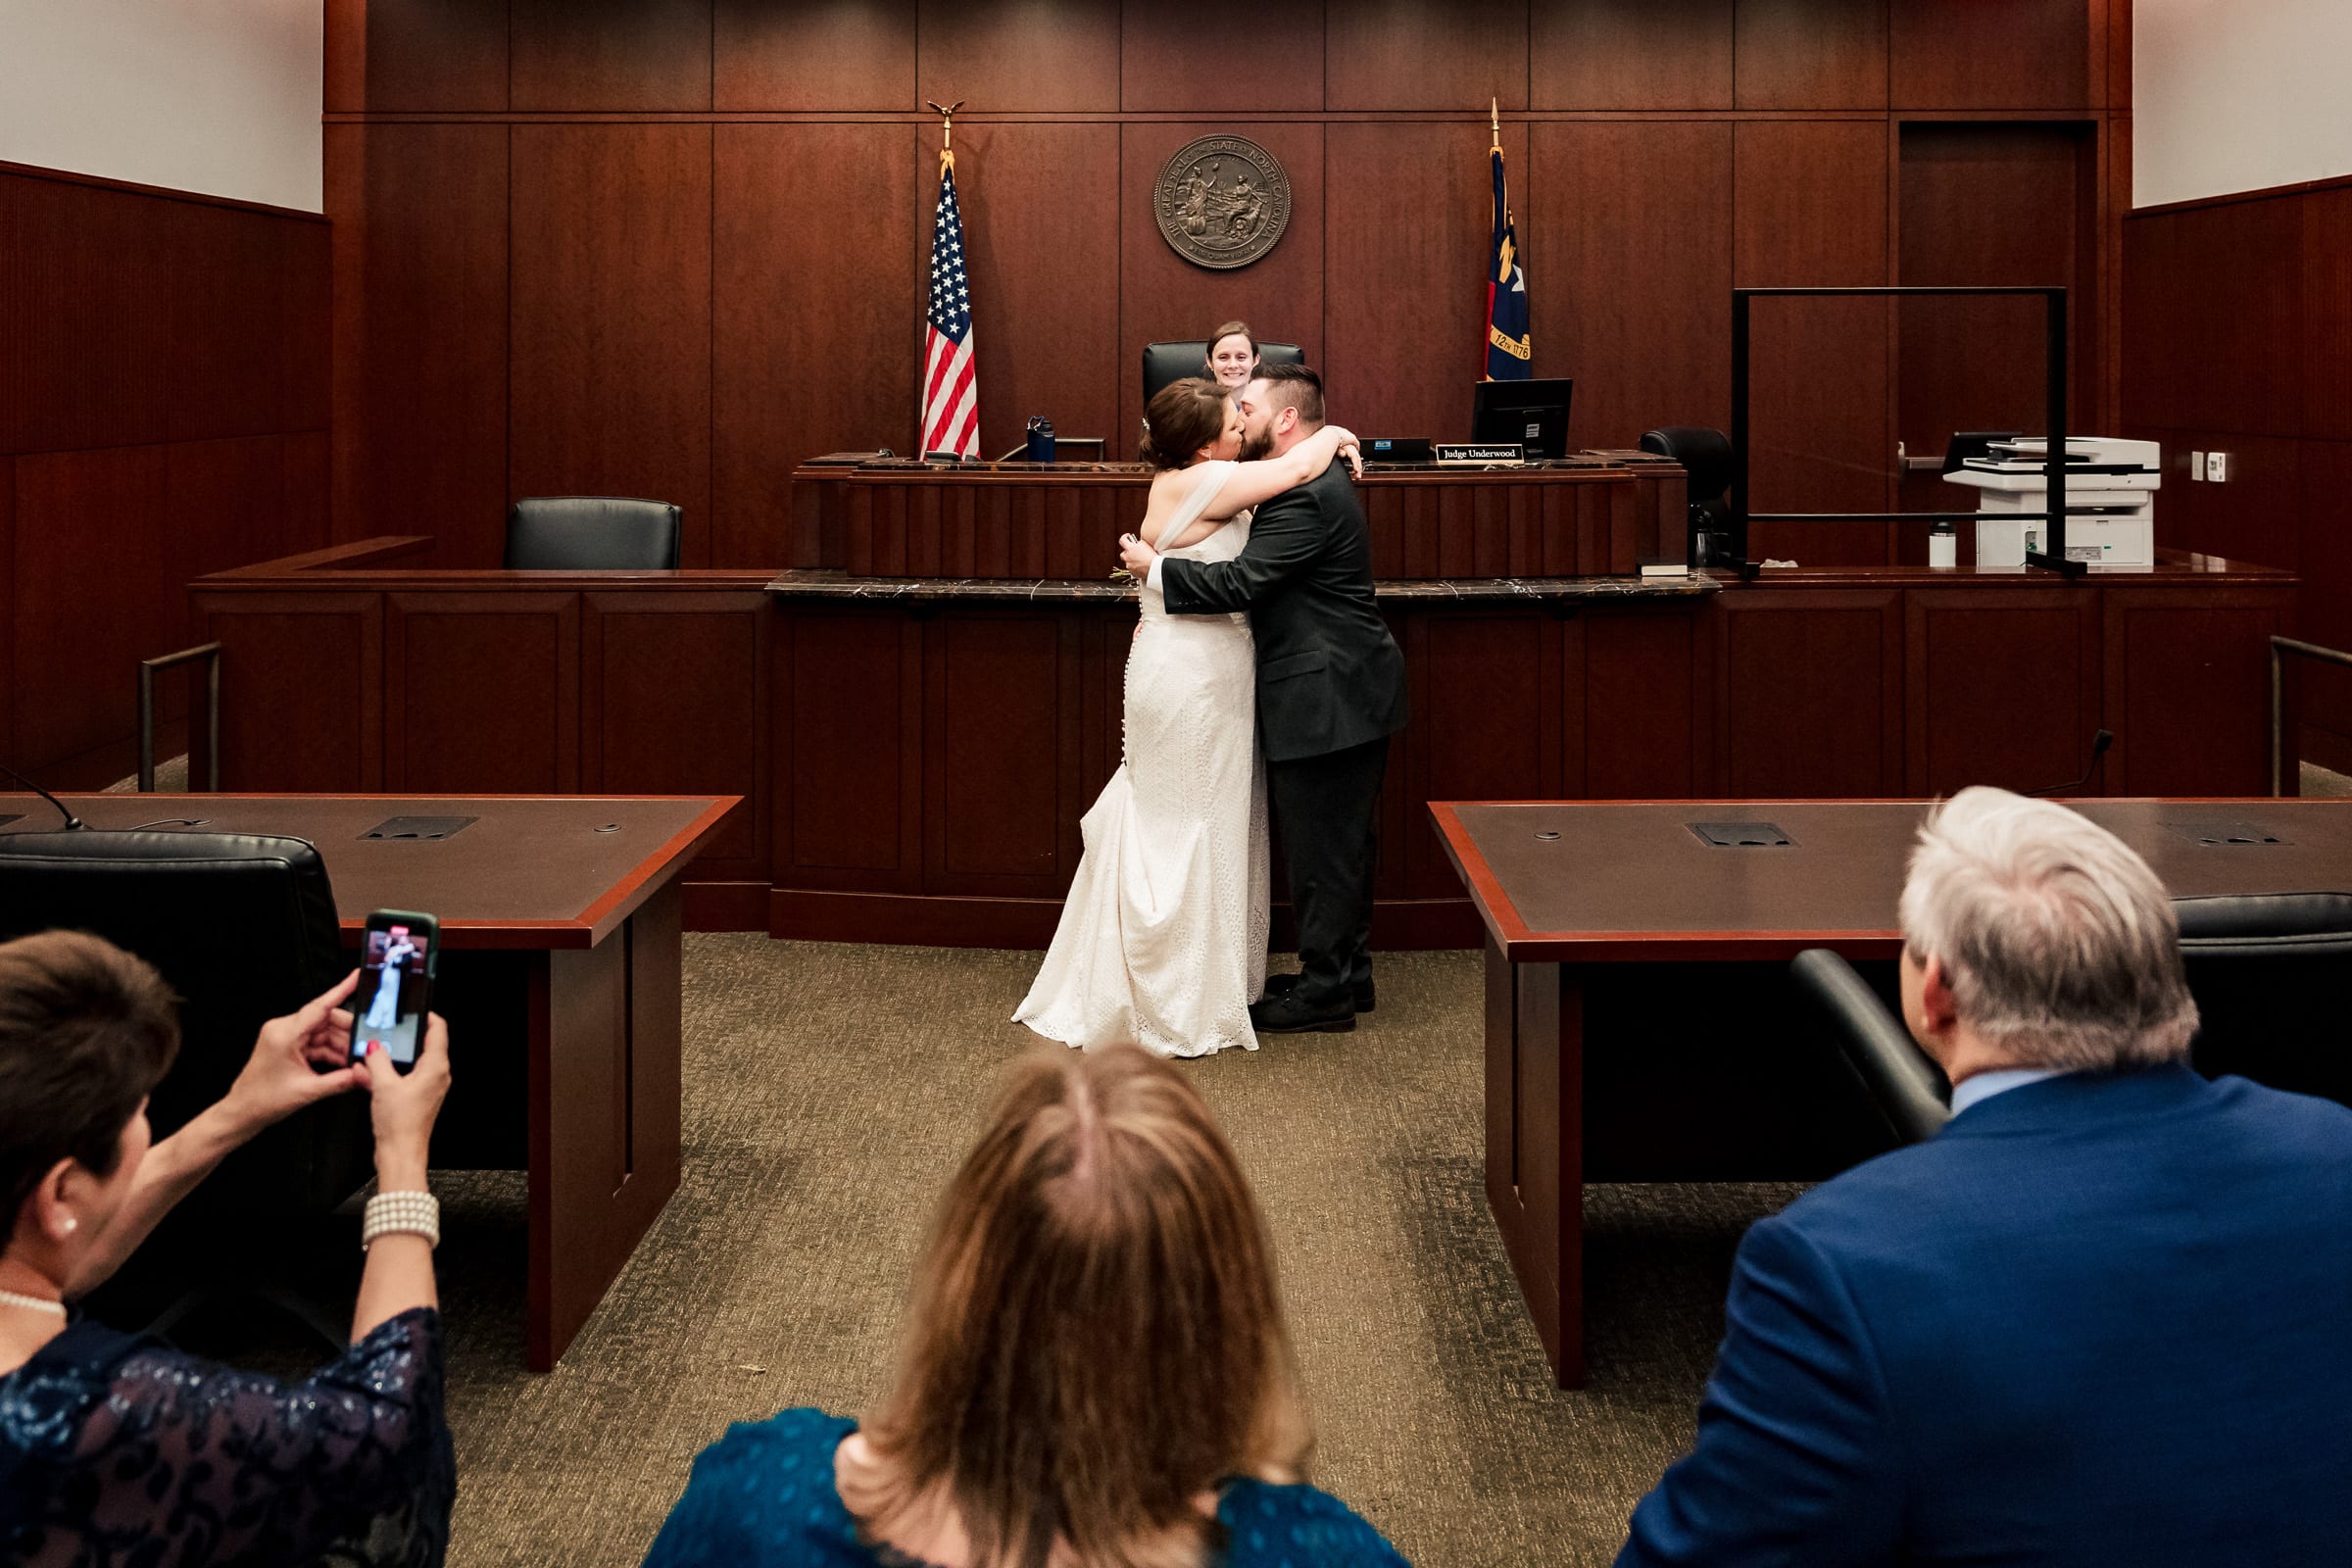 courthouse wedding photos by Kivus & Camera